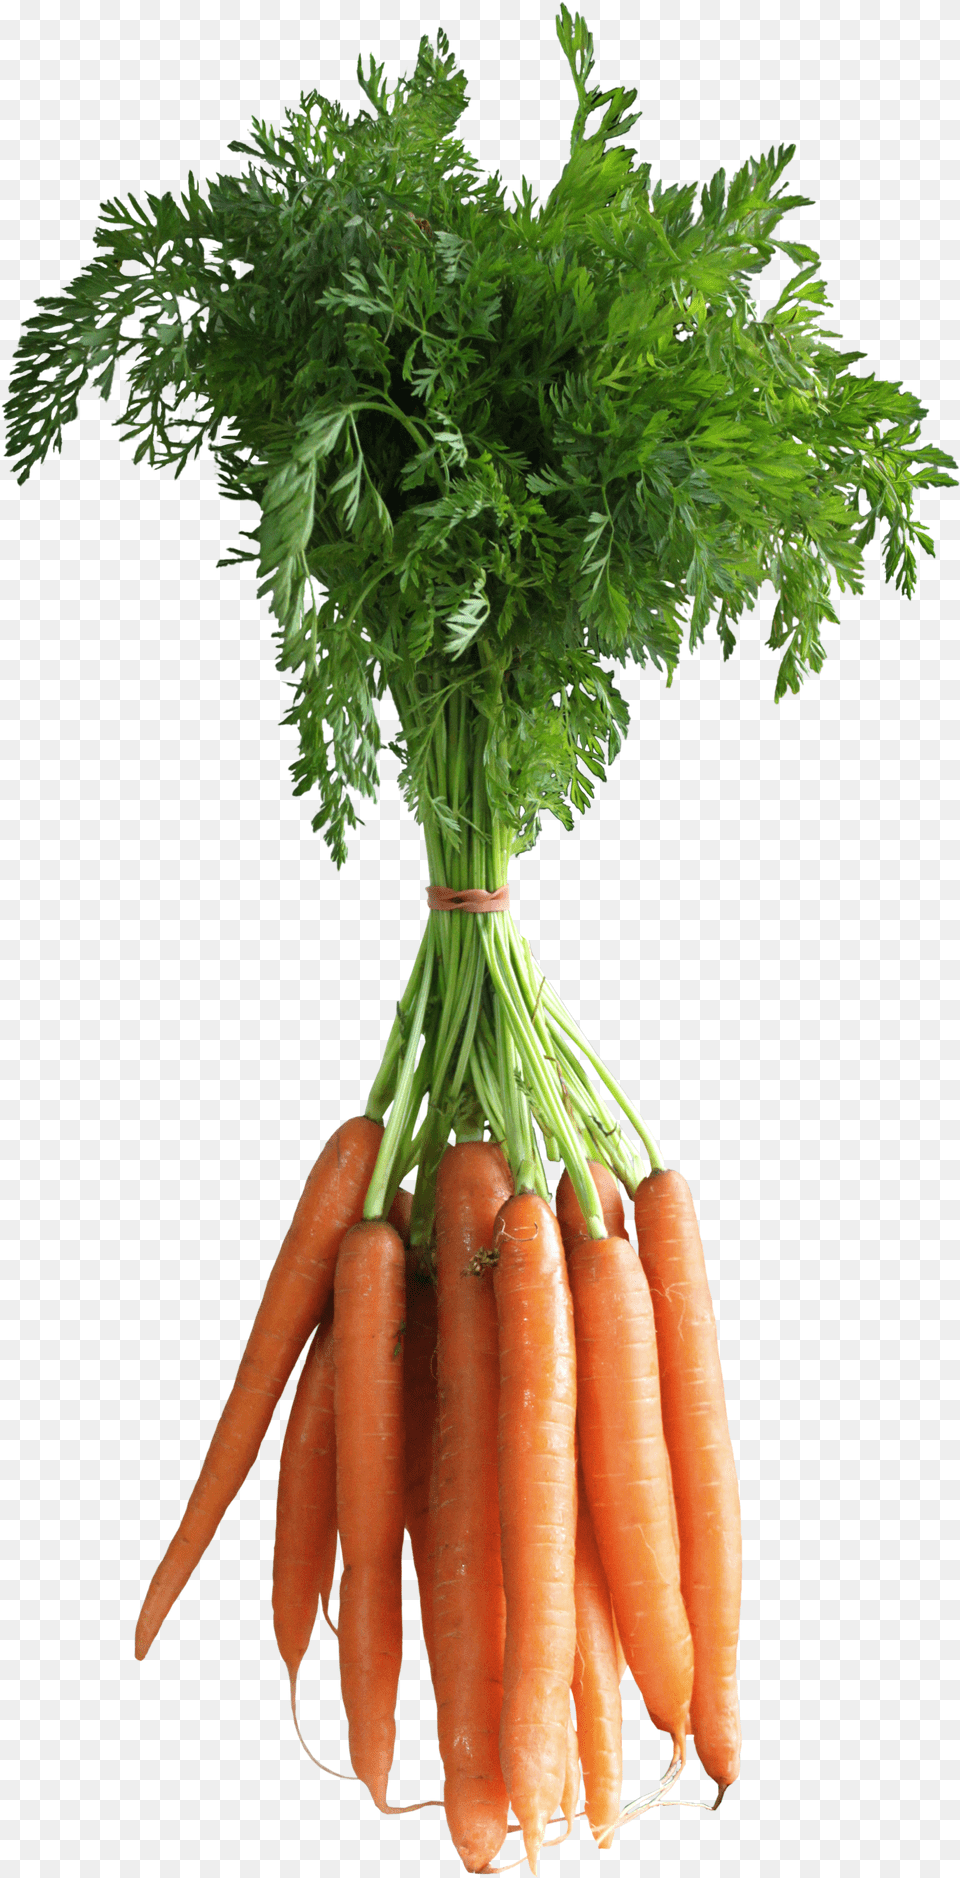 Background Carrot Leaf, Food, Plant, Produce, Vegetable Png